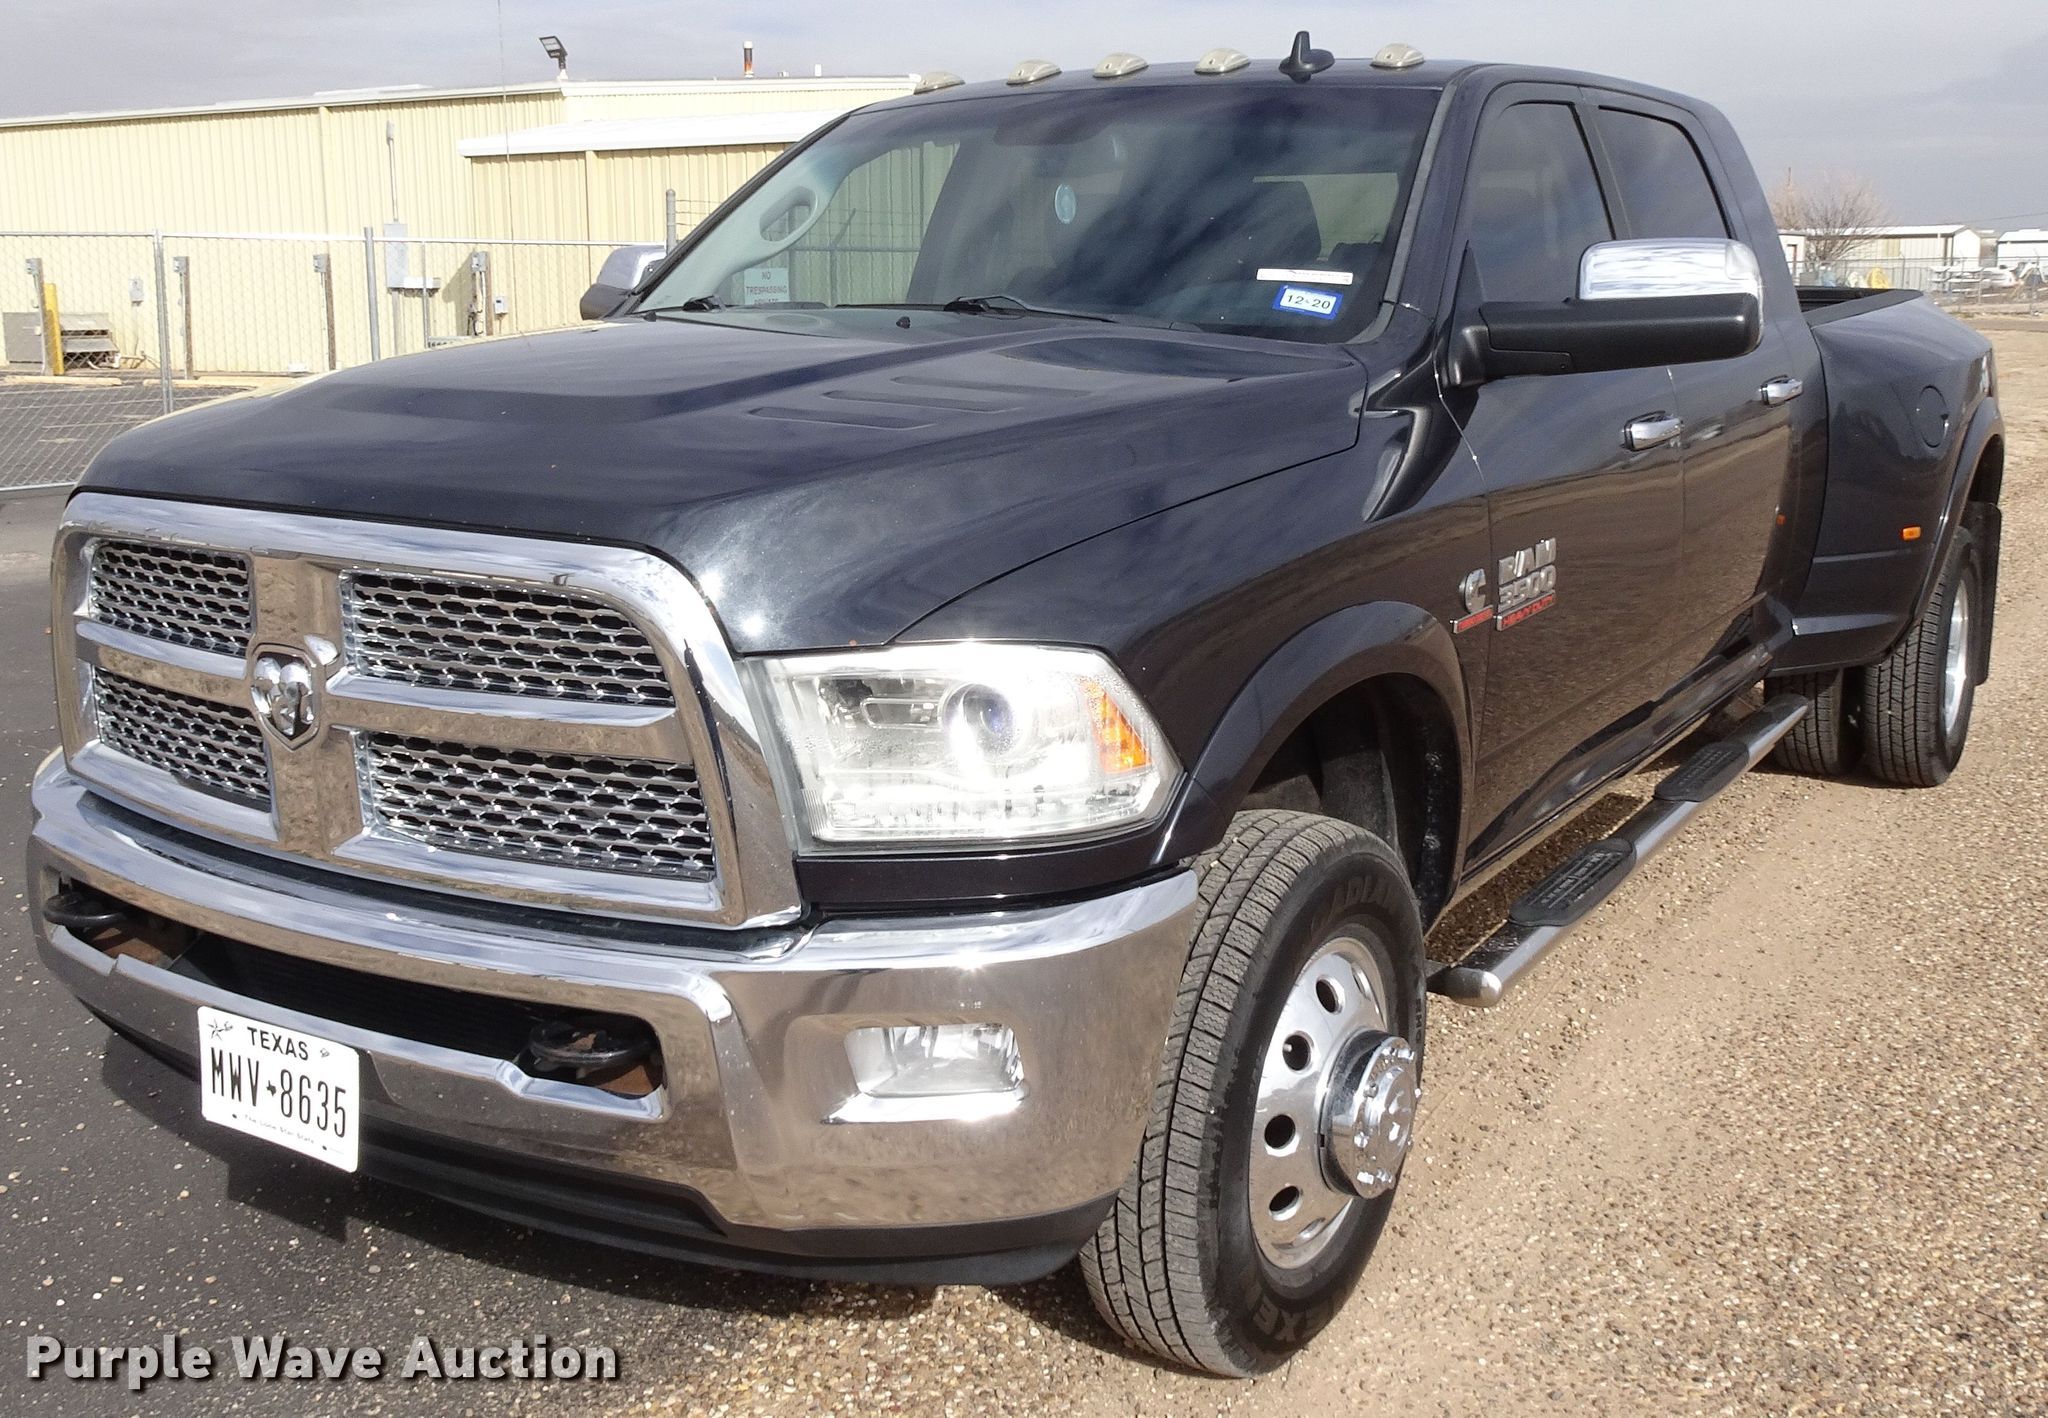 2014 Dodge Ram 3500 Mega Cab pickup truck in Lubbock, TX | Item GC9171 sold  | Purple Wave